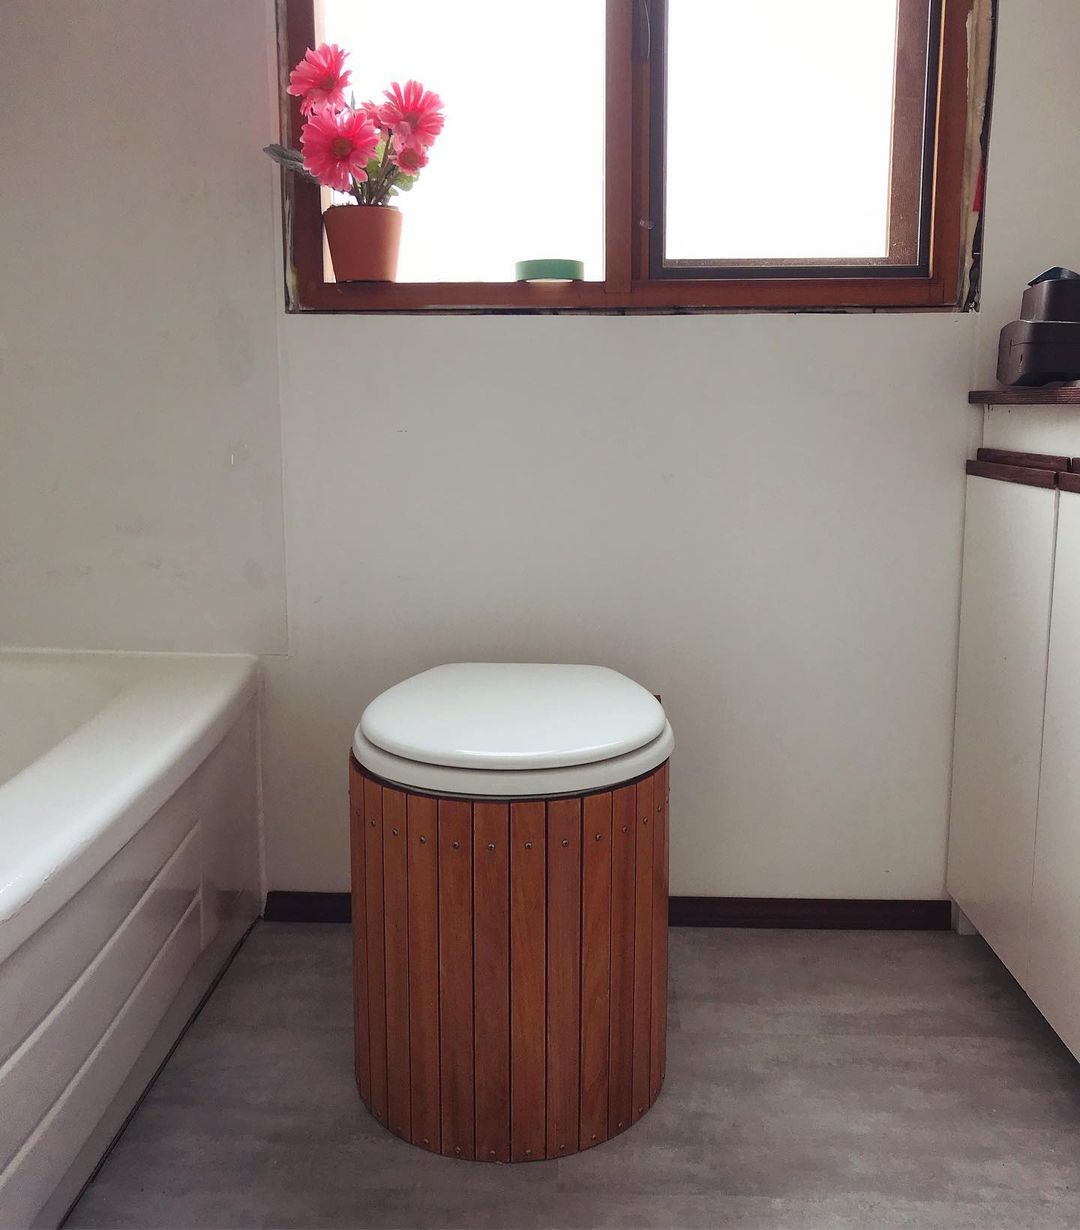 Eco-friendly toilet. Photo by Instagram user @earth.enchantress